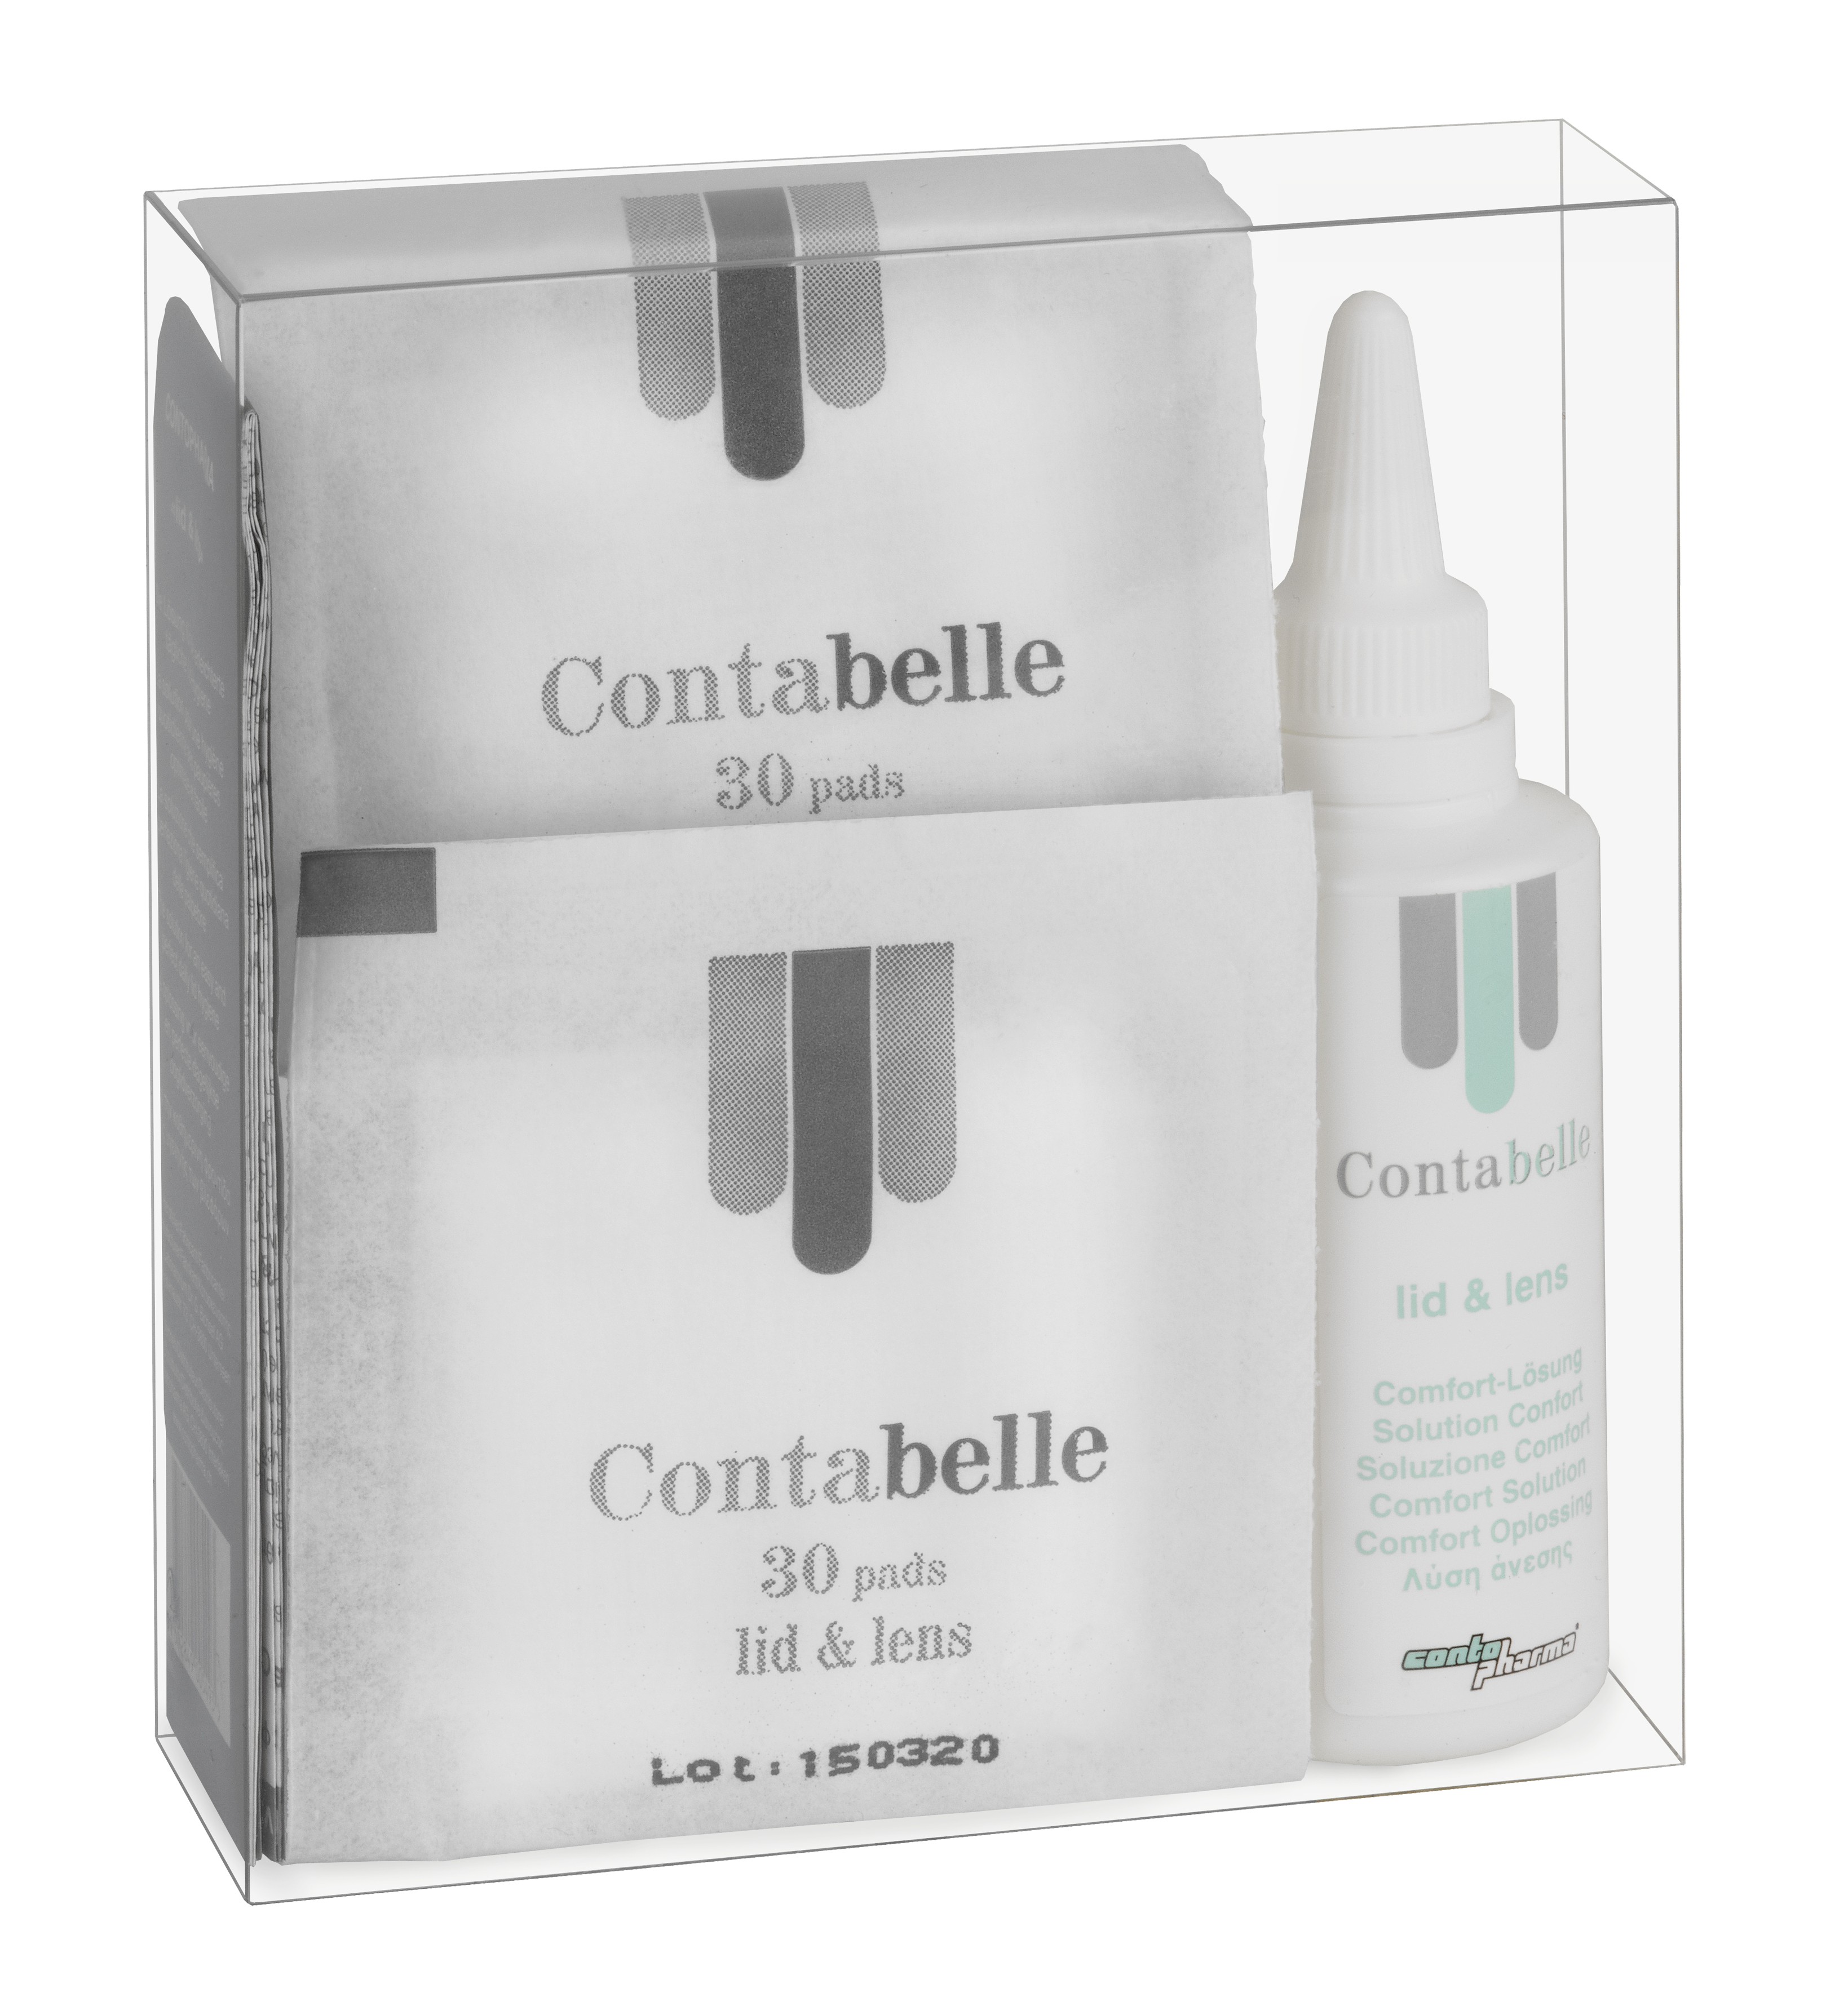 CONTABELLE "lid&lens" Comfort-System